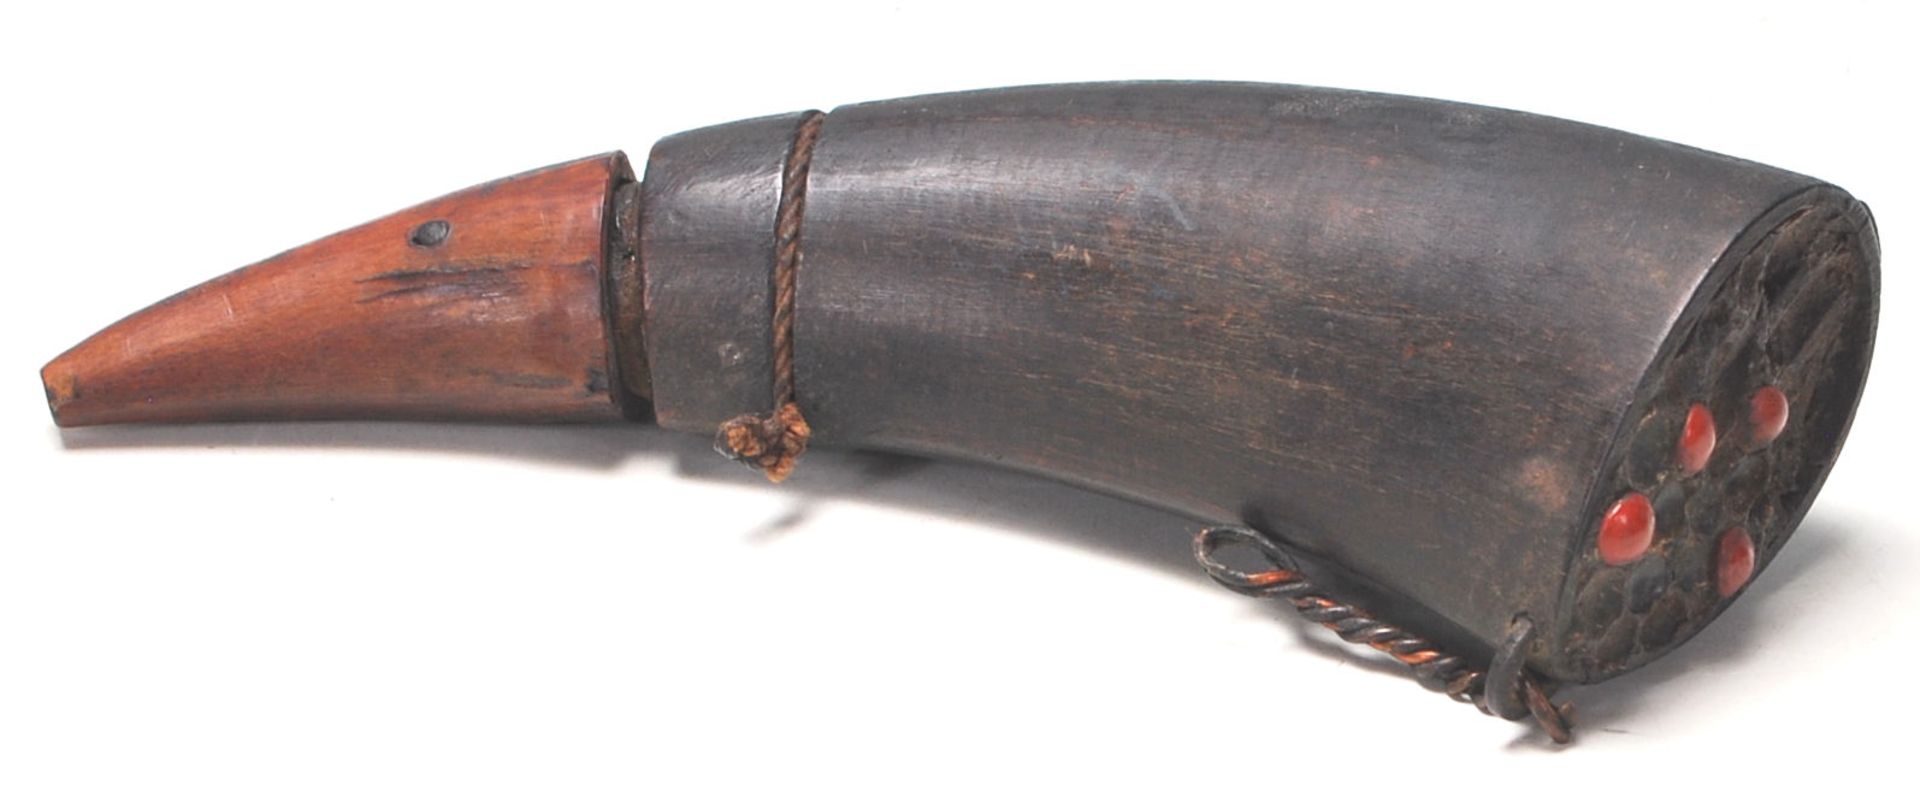 A 19th Century Victorian bone gunpowder horn having a cork stopper having a copper wire handle and